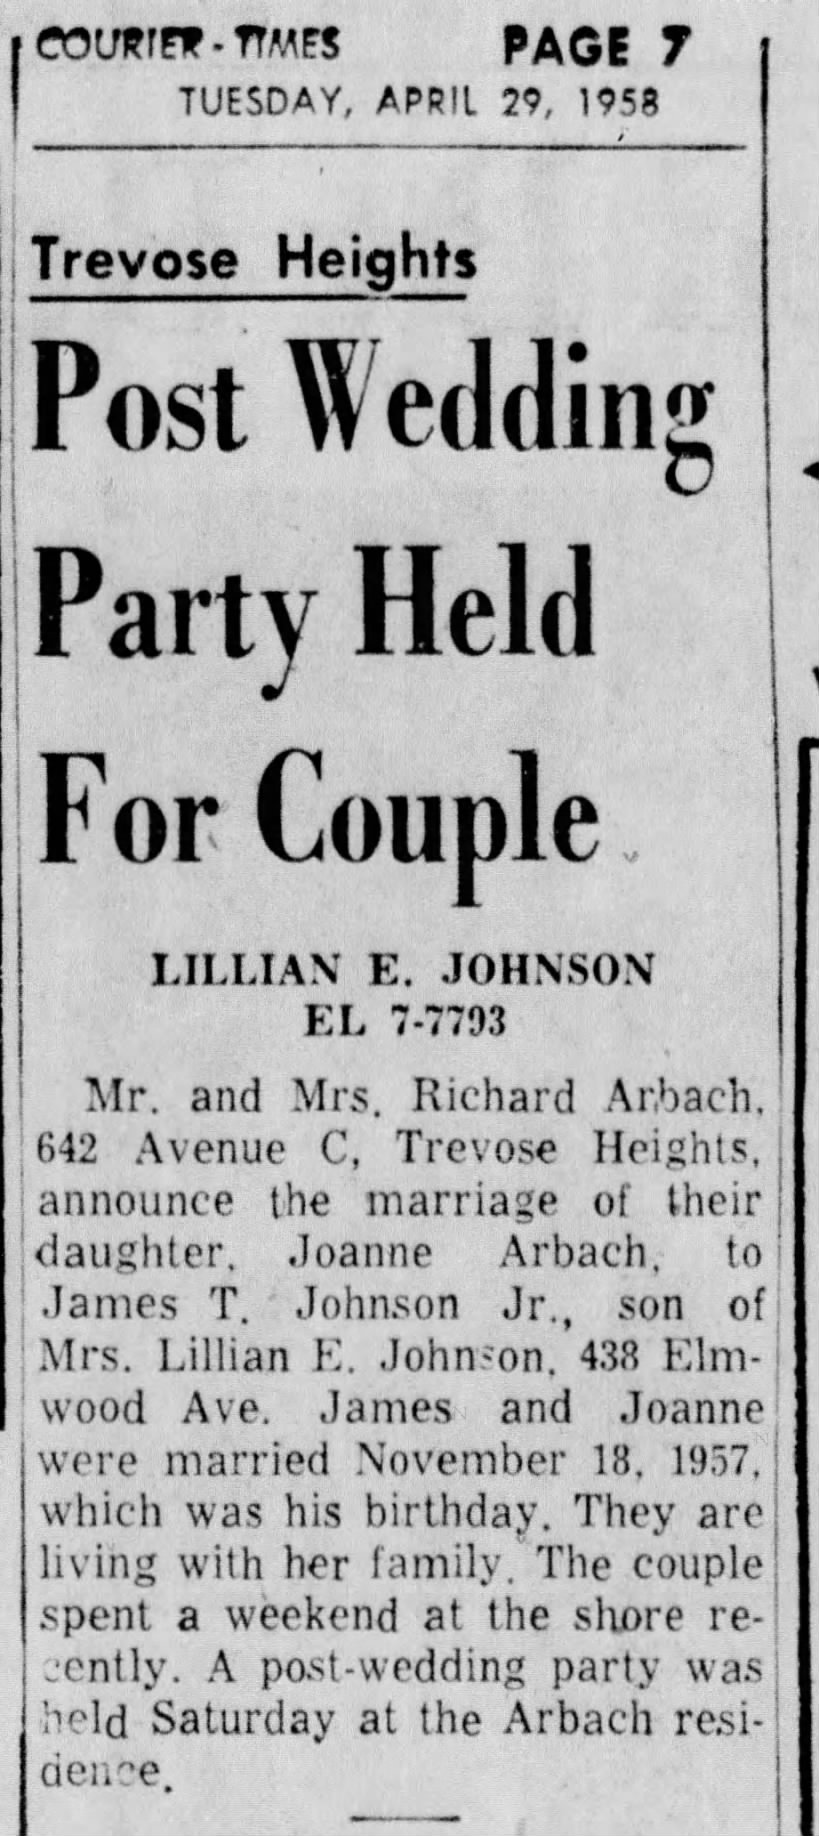 Marrage announce 11/18/1957 Joanne Arbach to James T. Johnson Jr.